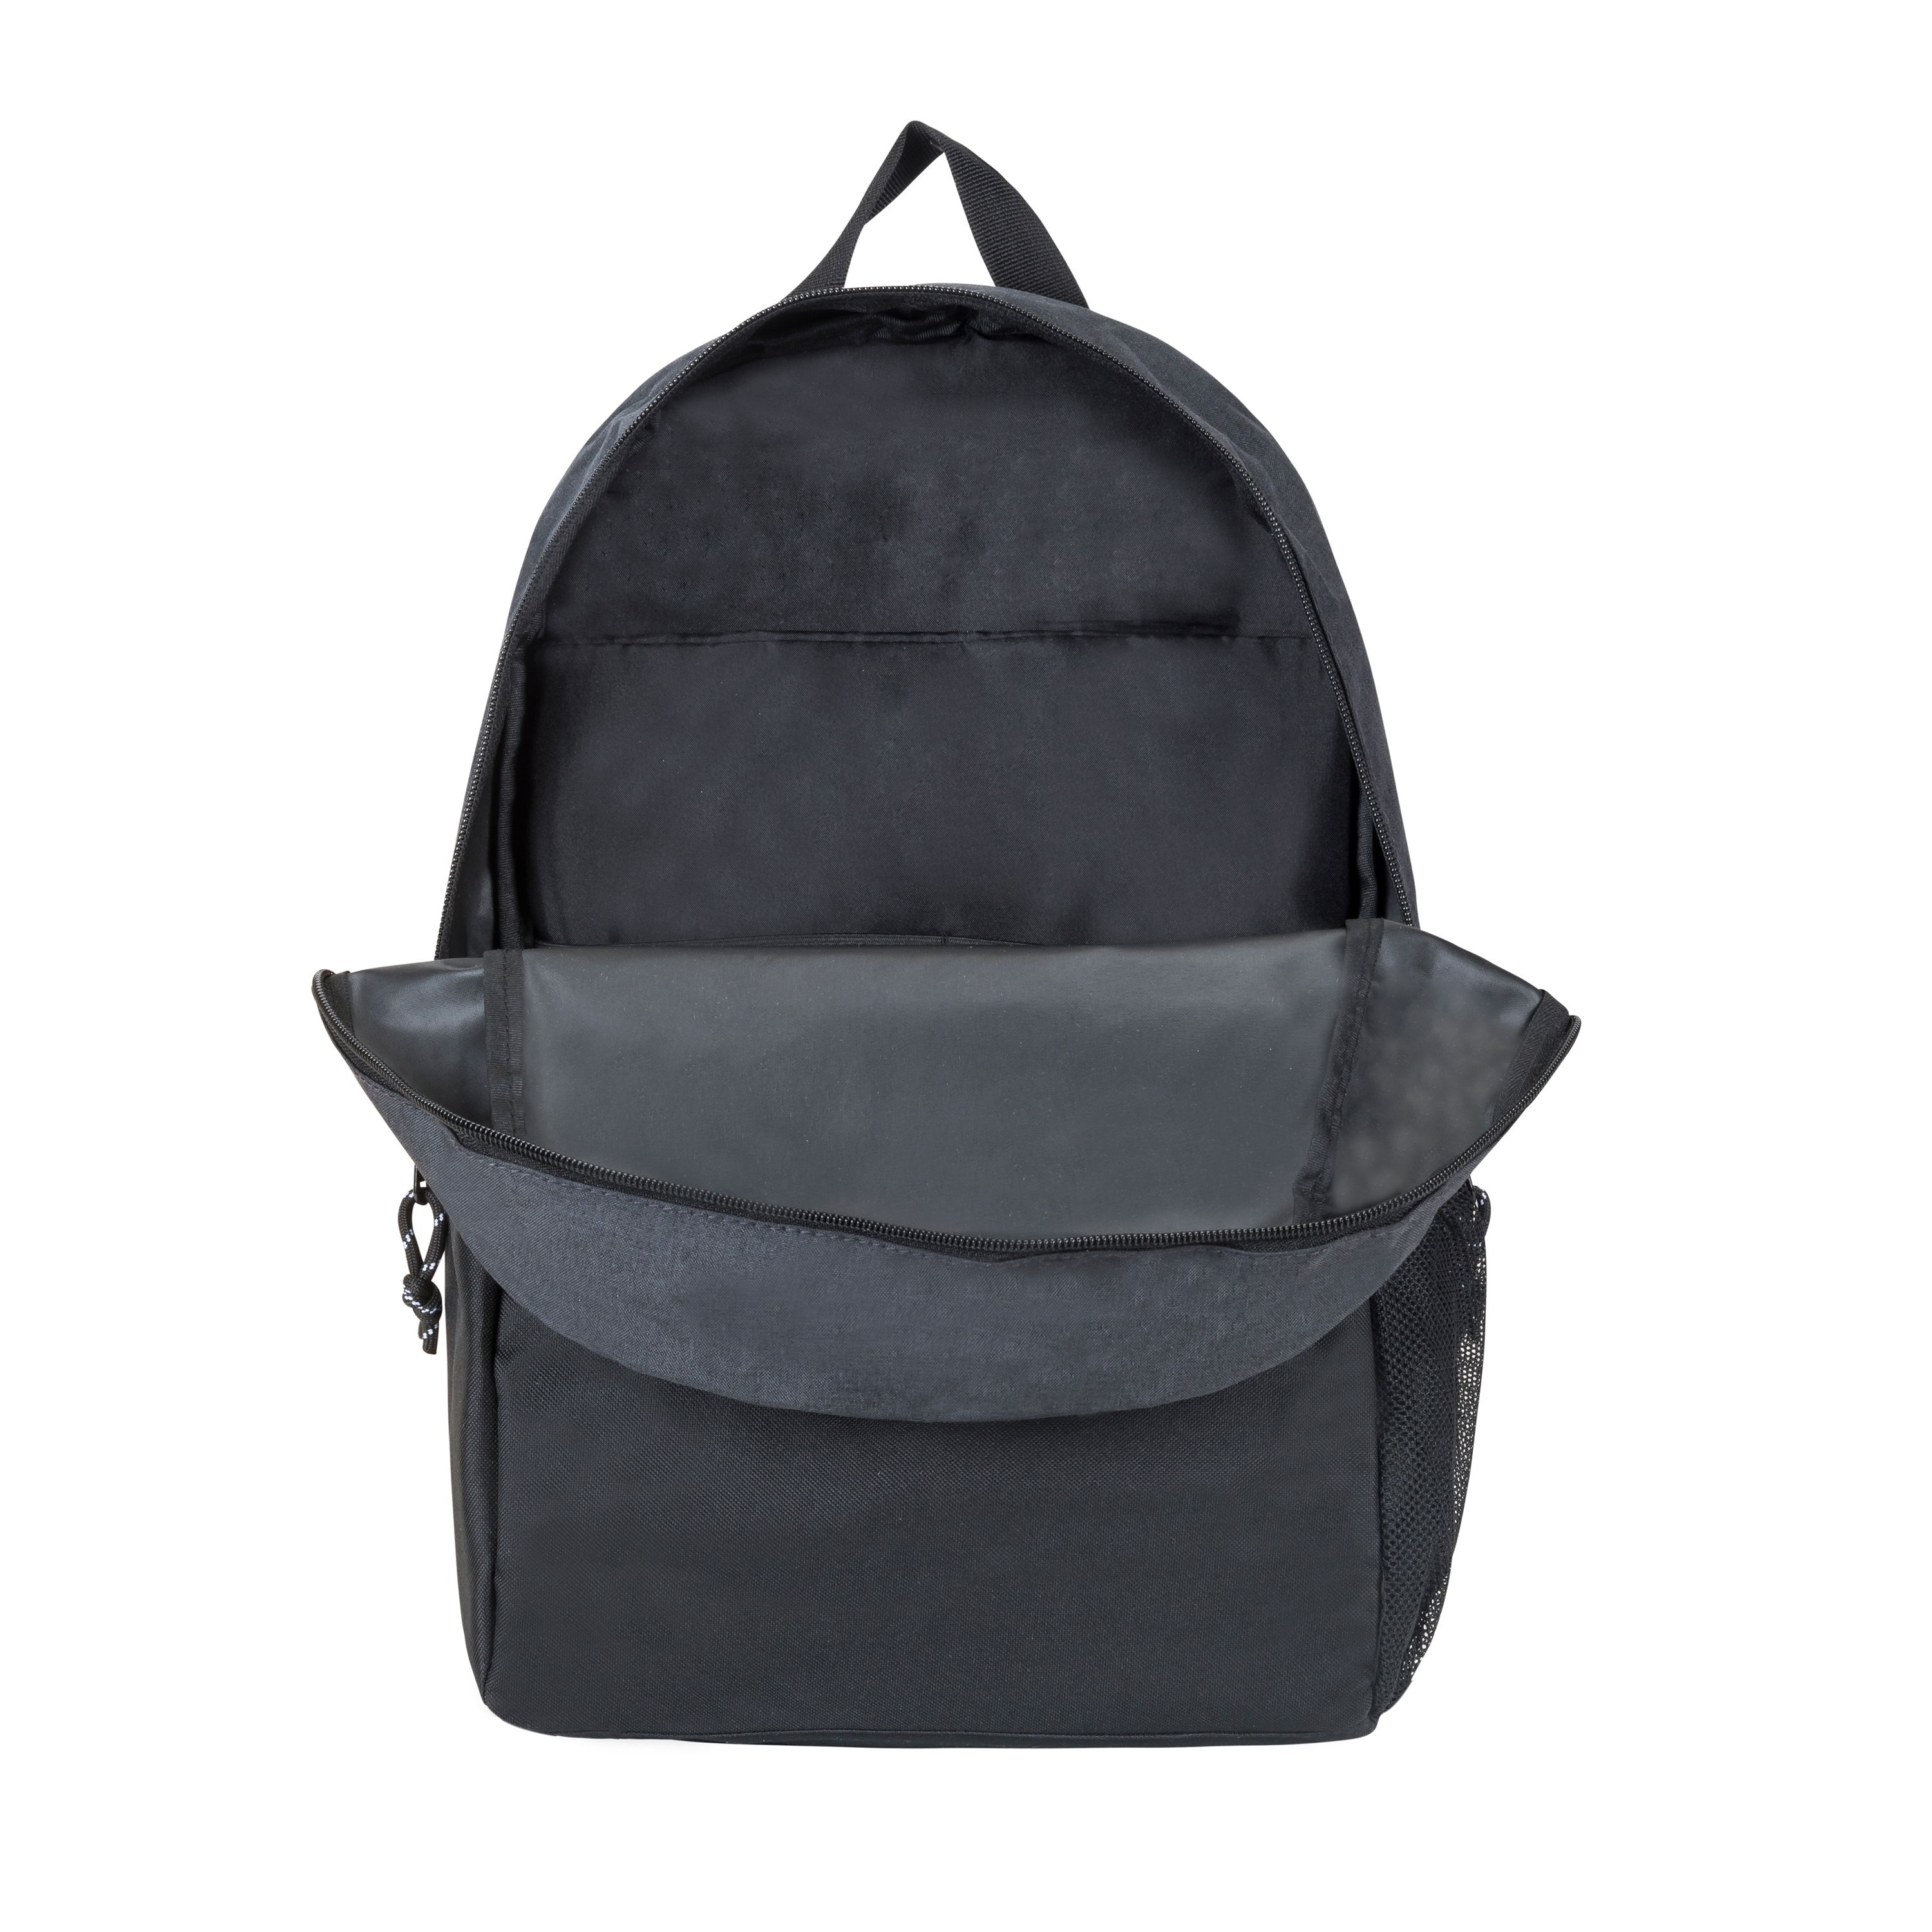 Champion Unisex Adult Velocity Backpack Dark Grey - image 2 of 2